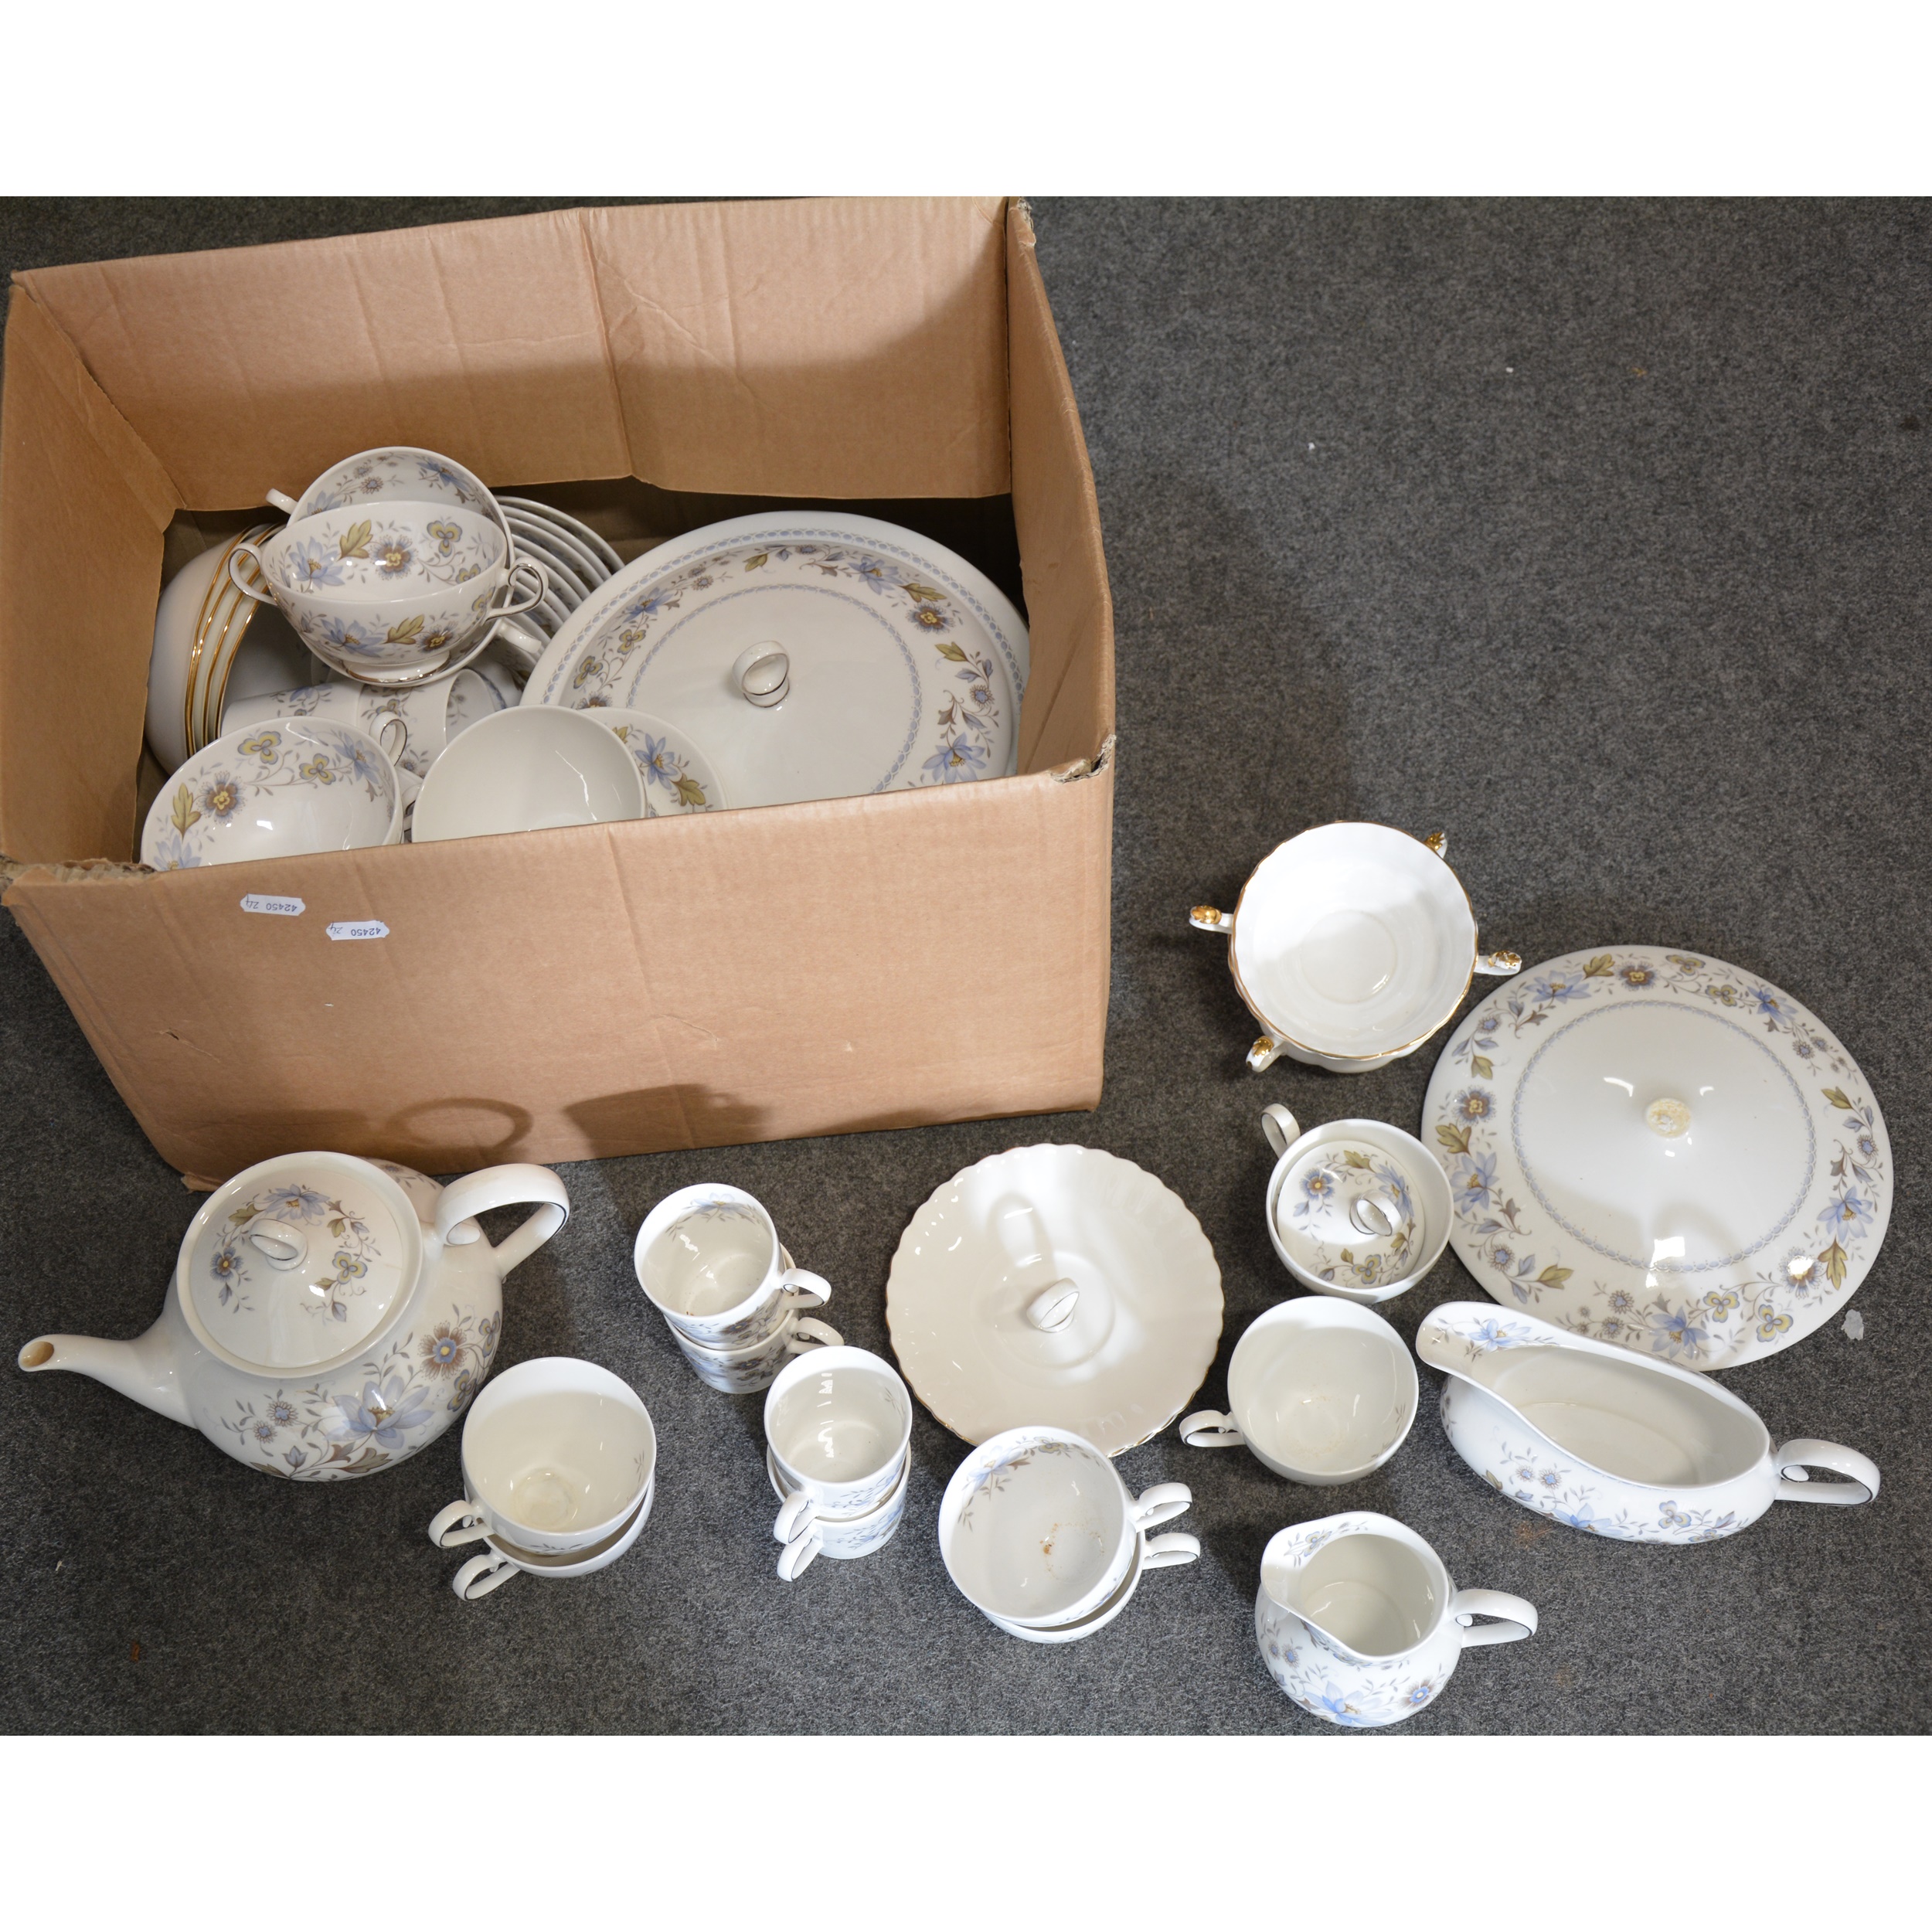 Ridgway bone china table wares, - Image 2 of 2